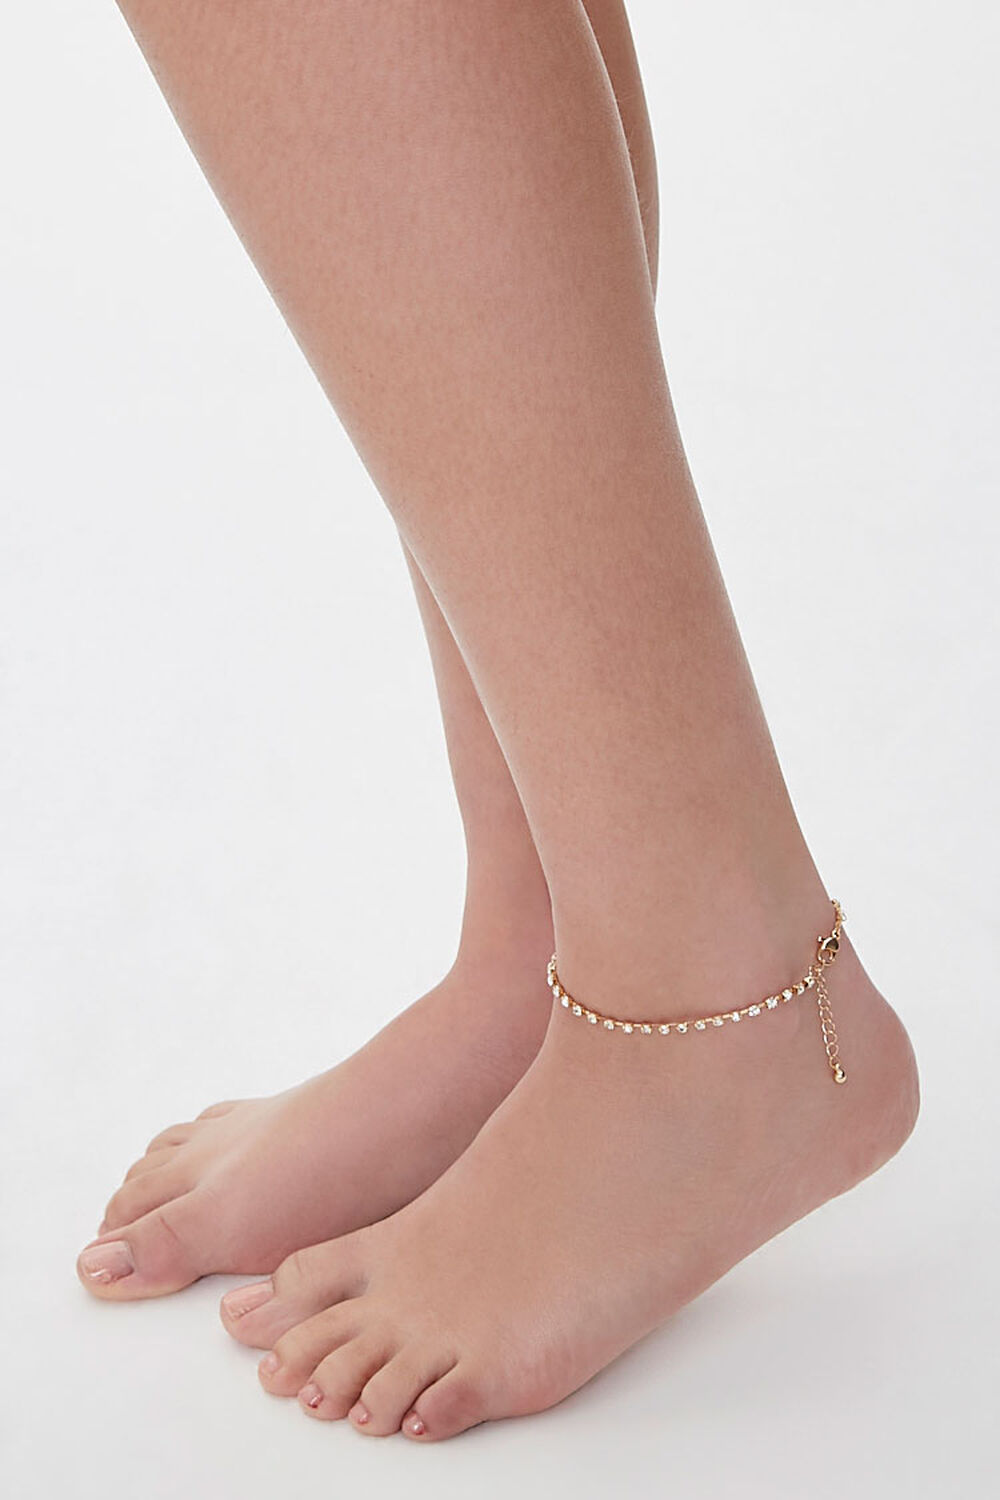 GOLD Rhinestone Box Chain Anklet, image 1